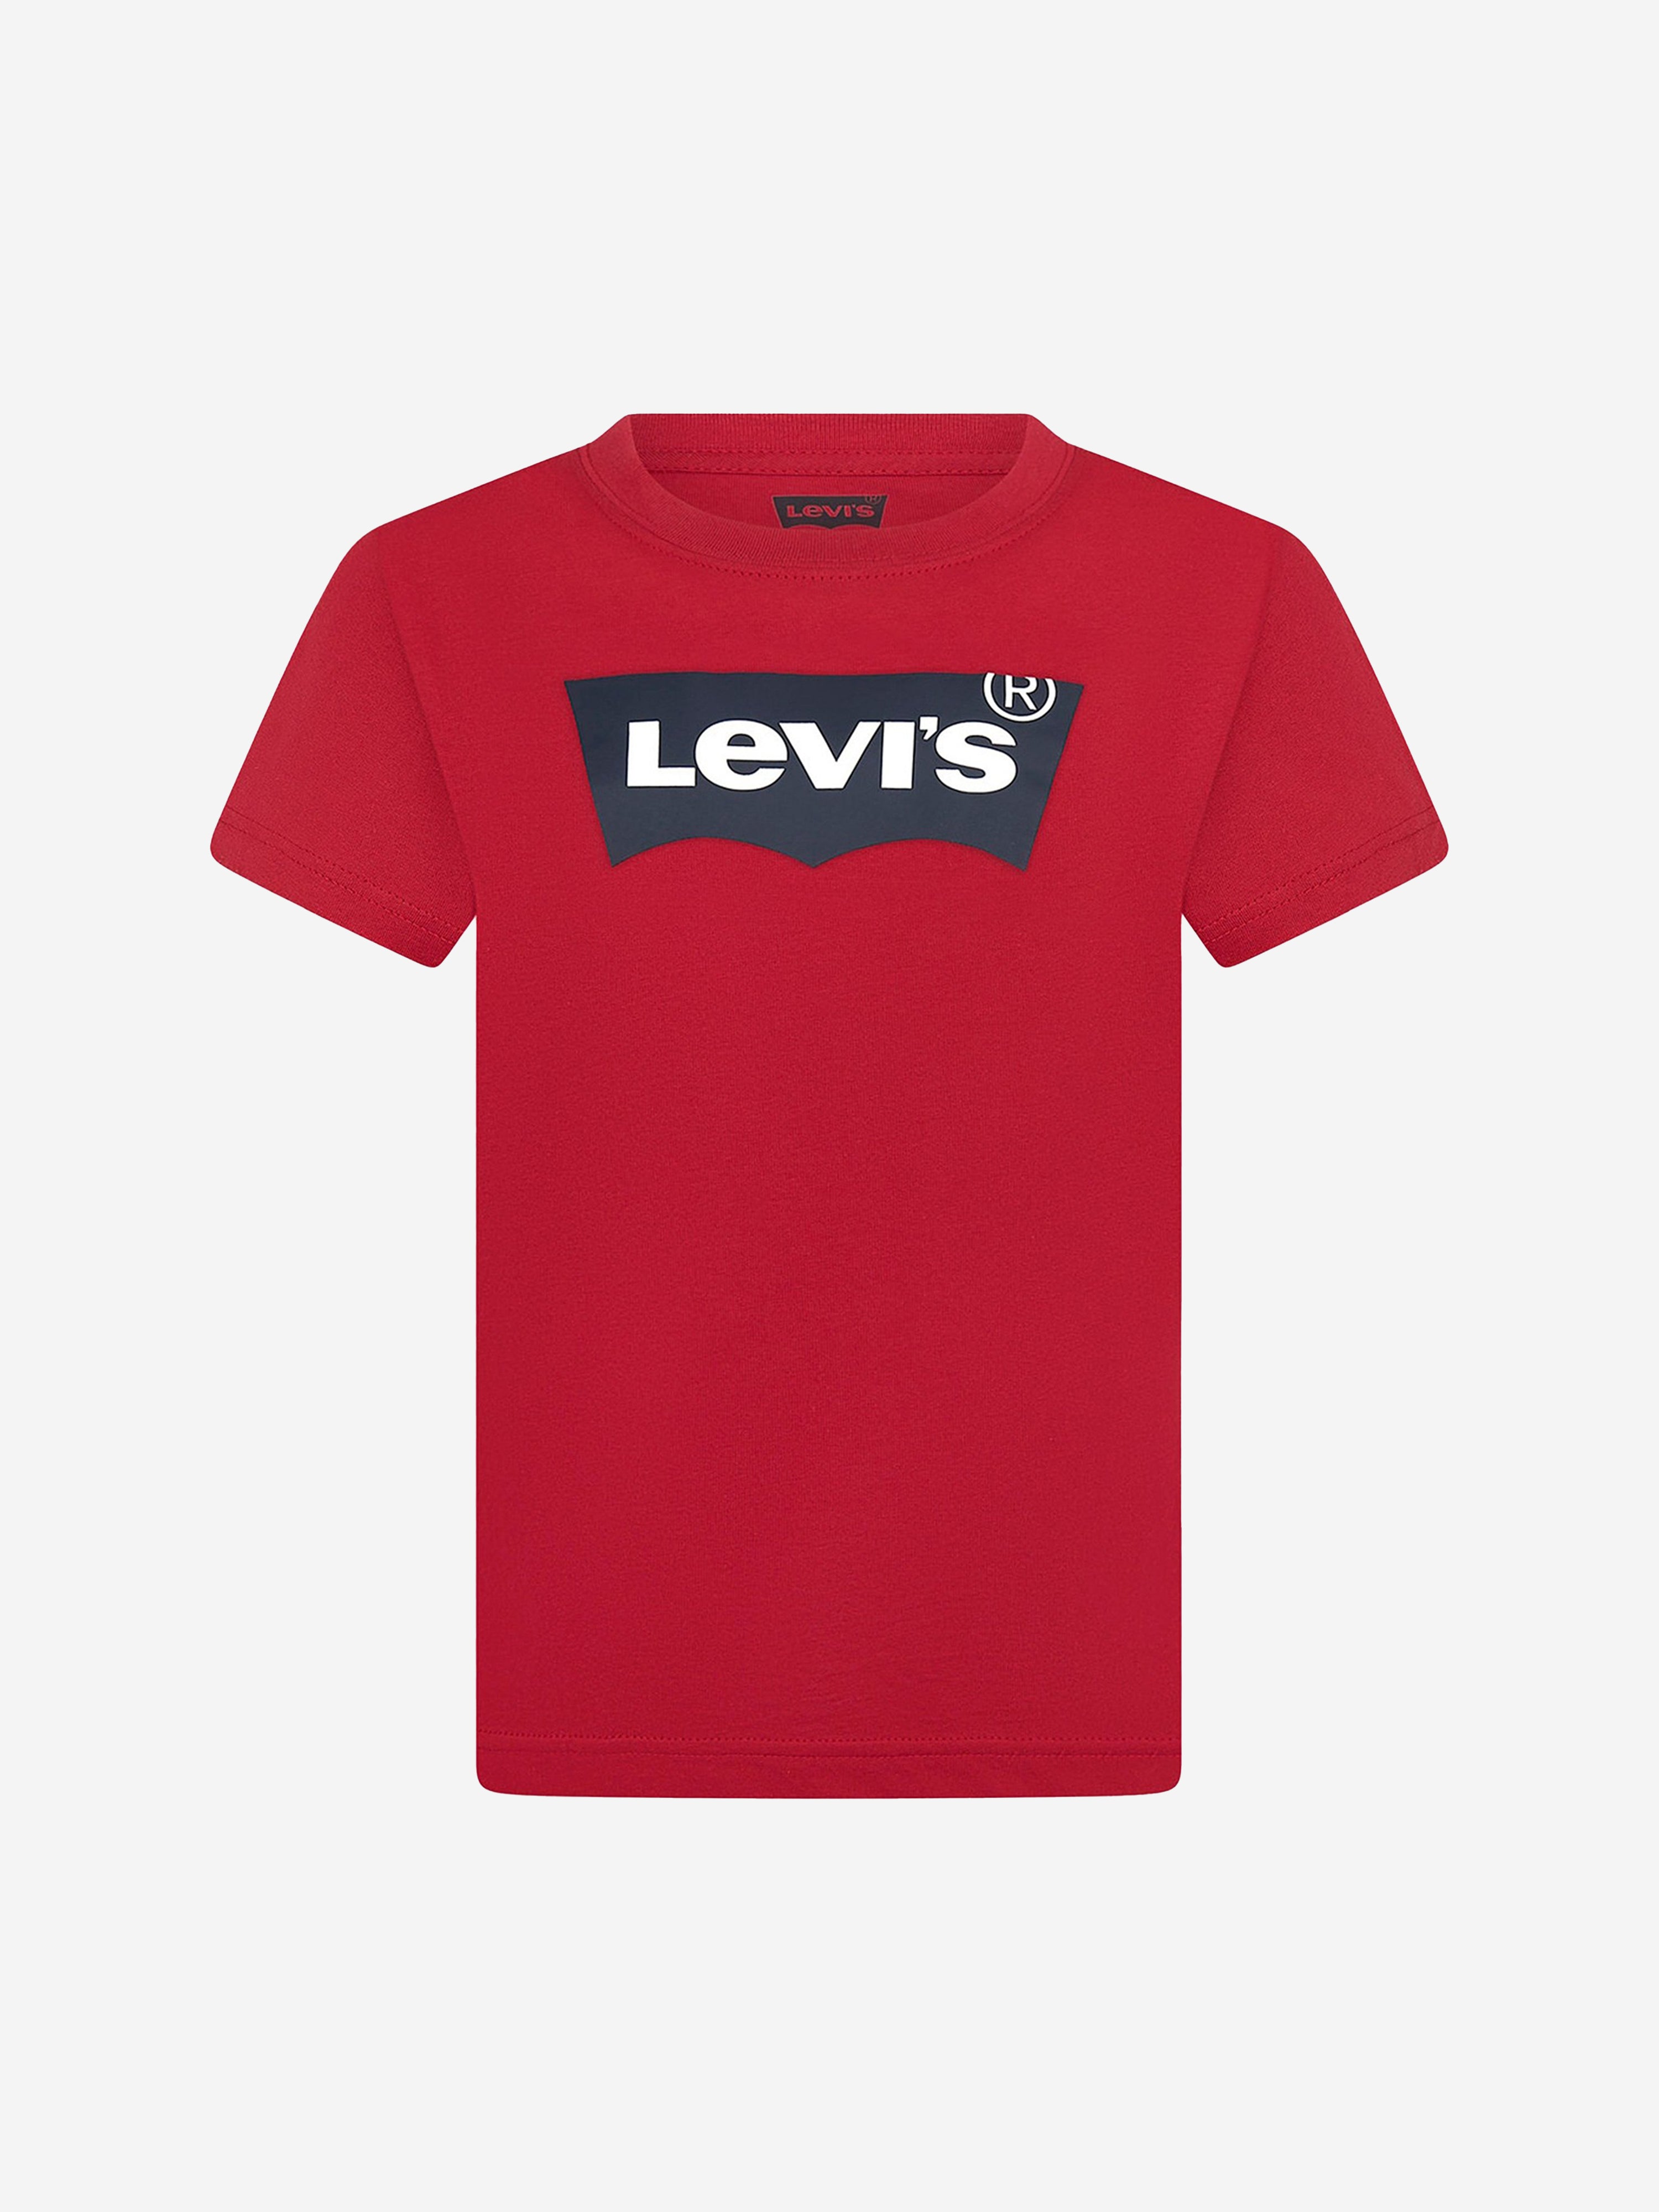 Levi's Kids Wear Boys T-Shirt | Childsplay Clothing